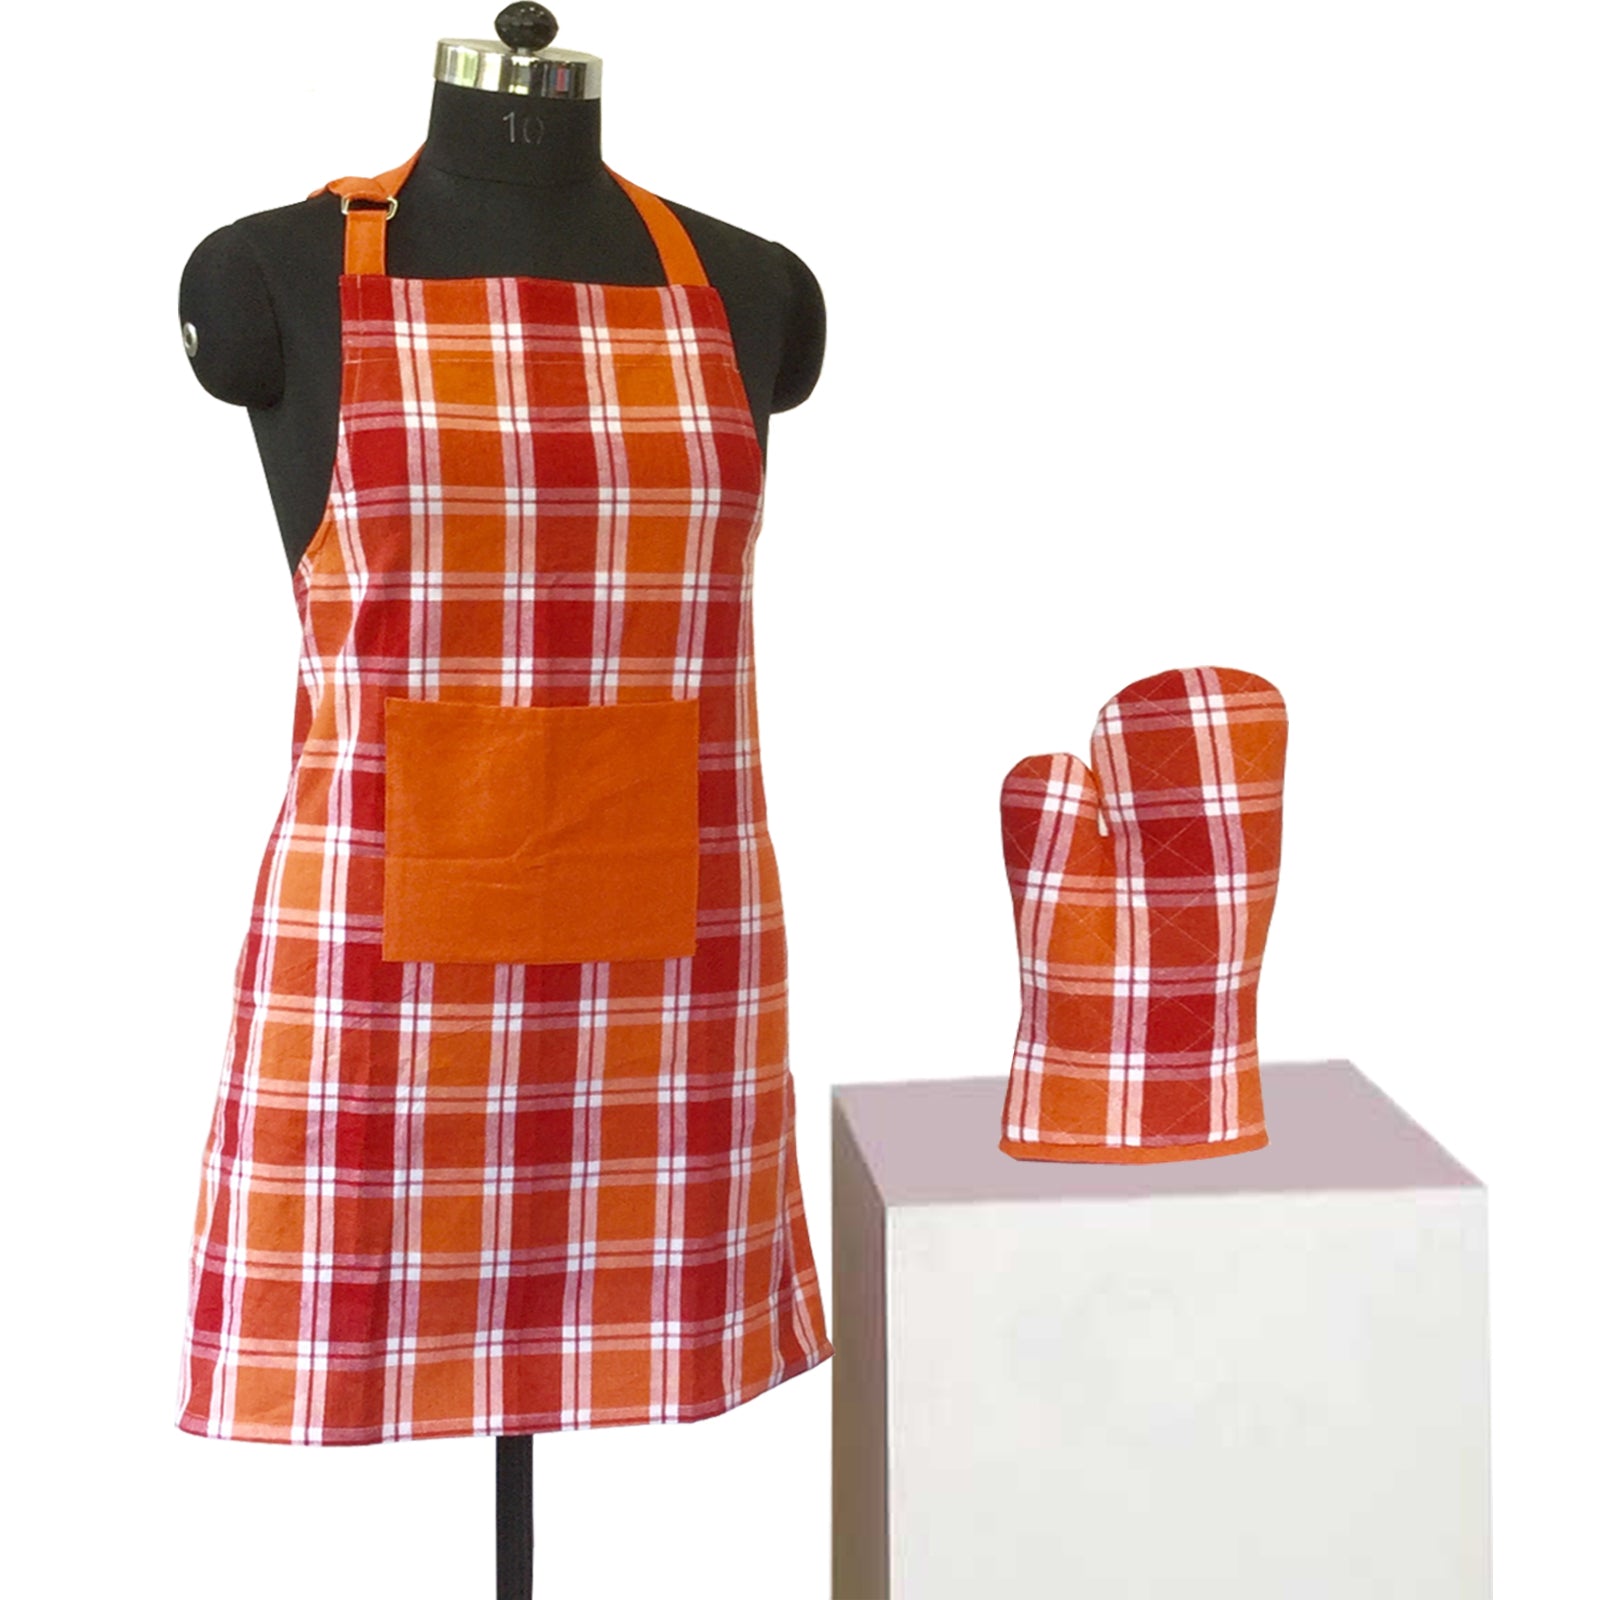 Lushomes Checks red and Orange Kitchen Cooking Apron Set for Women (2 Pc Set, Oven Glove 17 x 32 cm, Apron 60 x 80 cms)